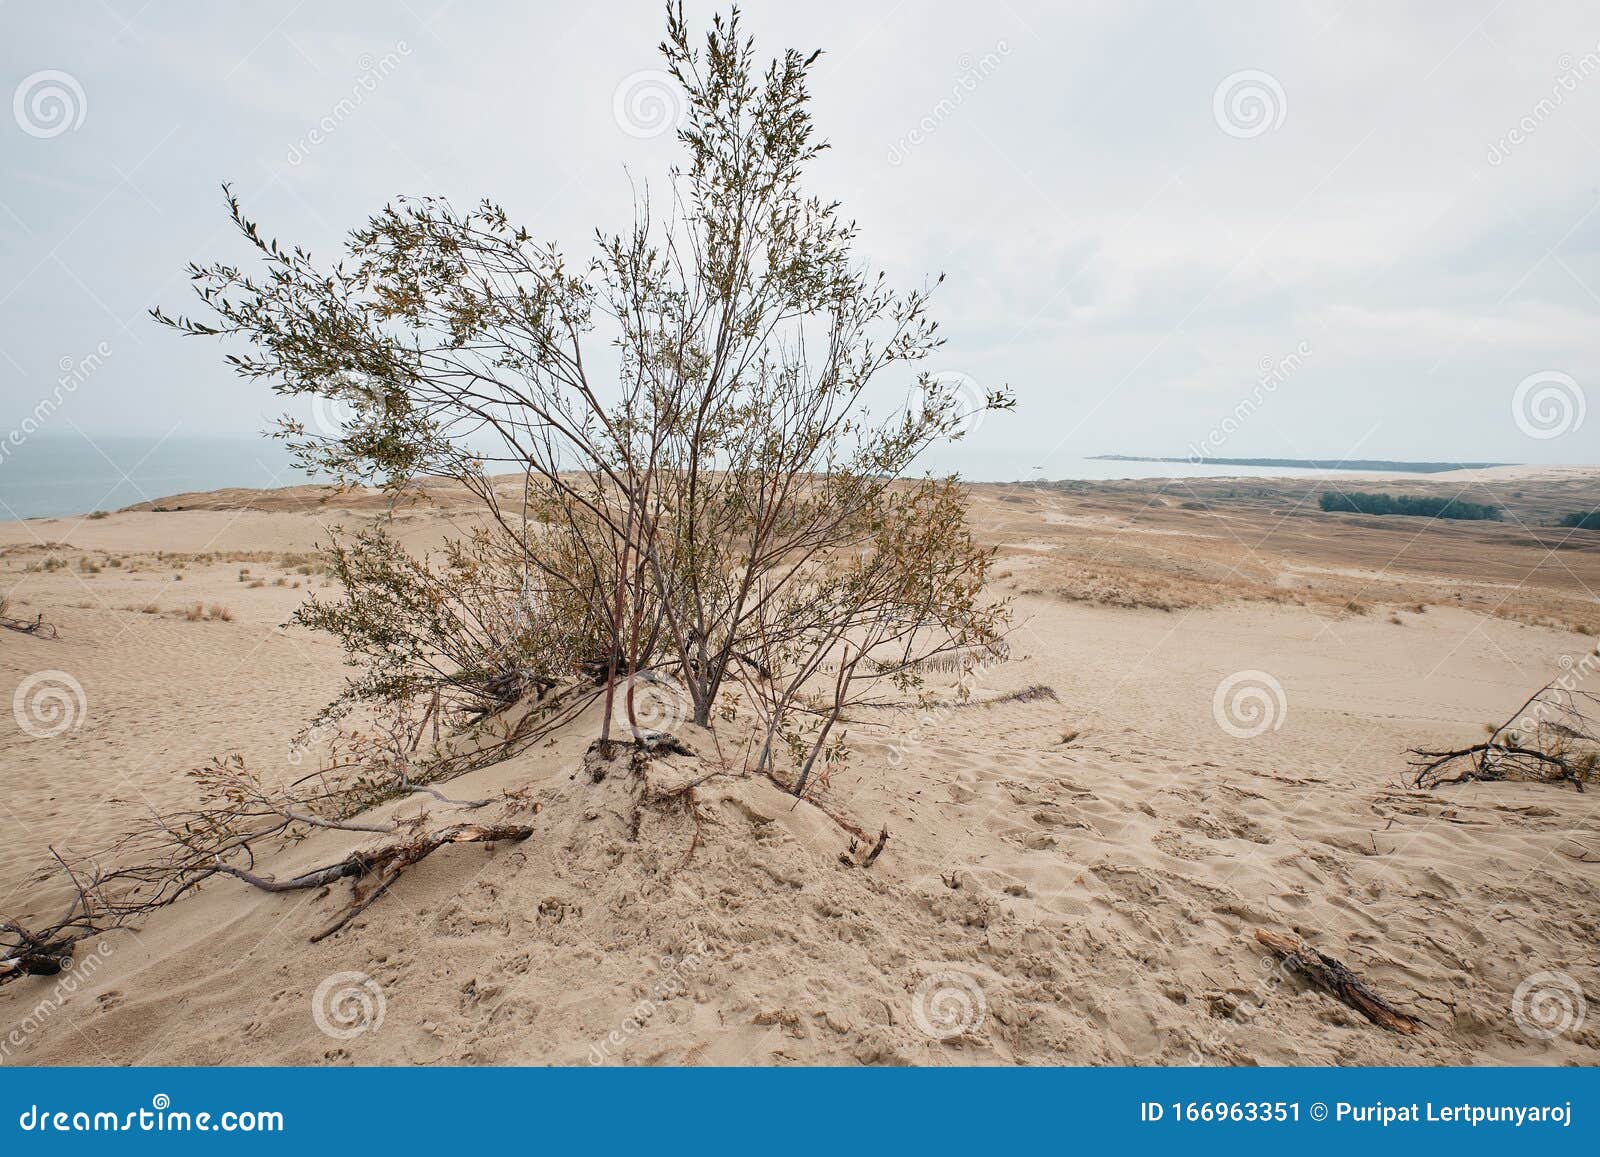 parnidis dune in nida, lituania